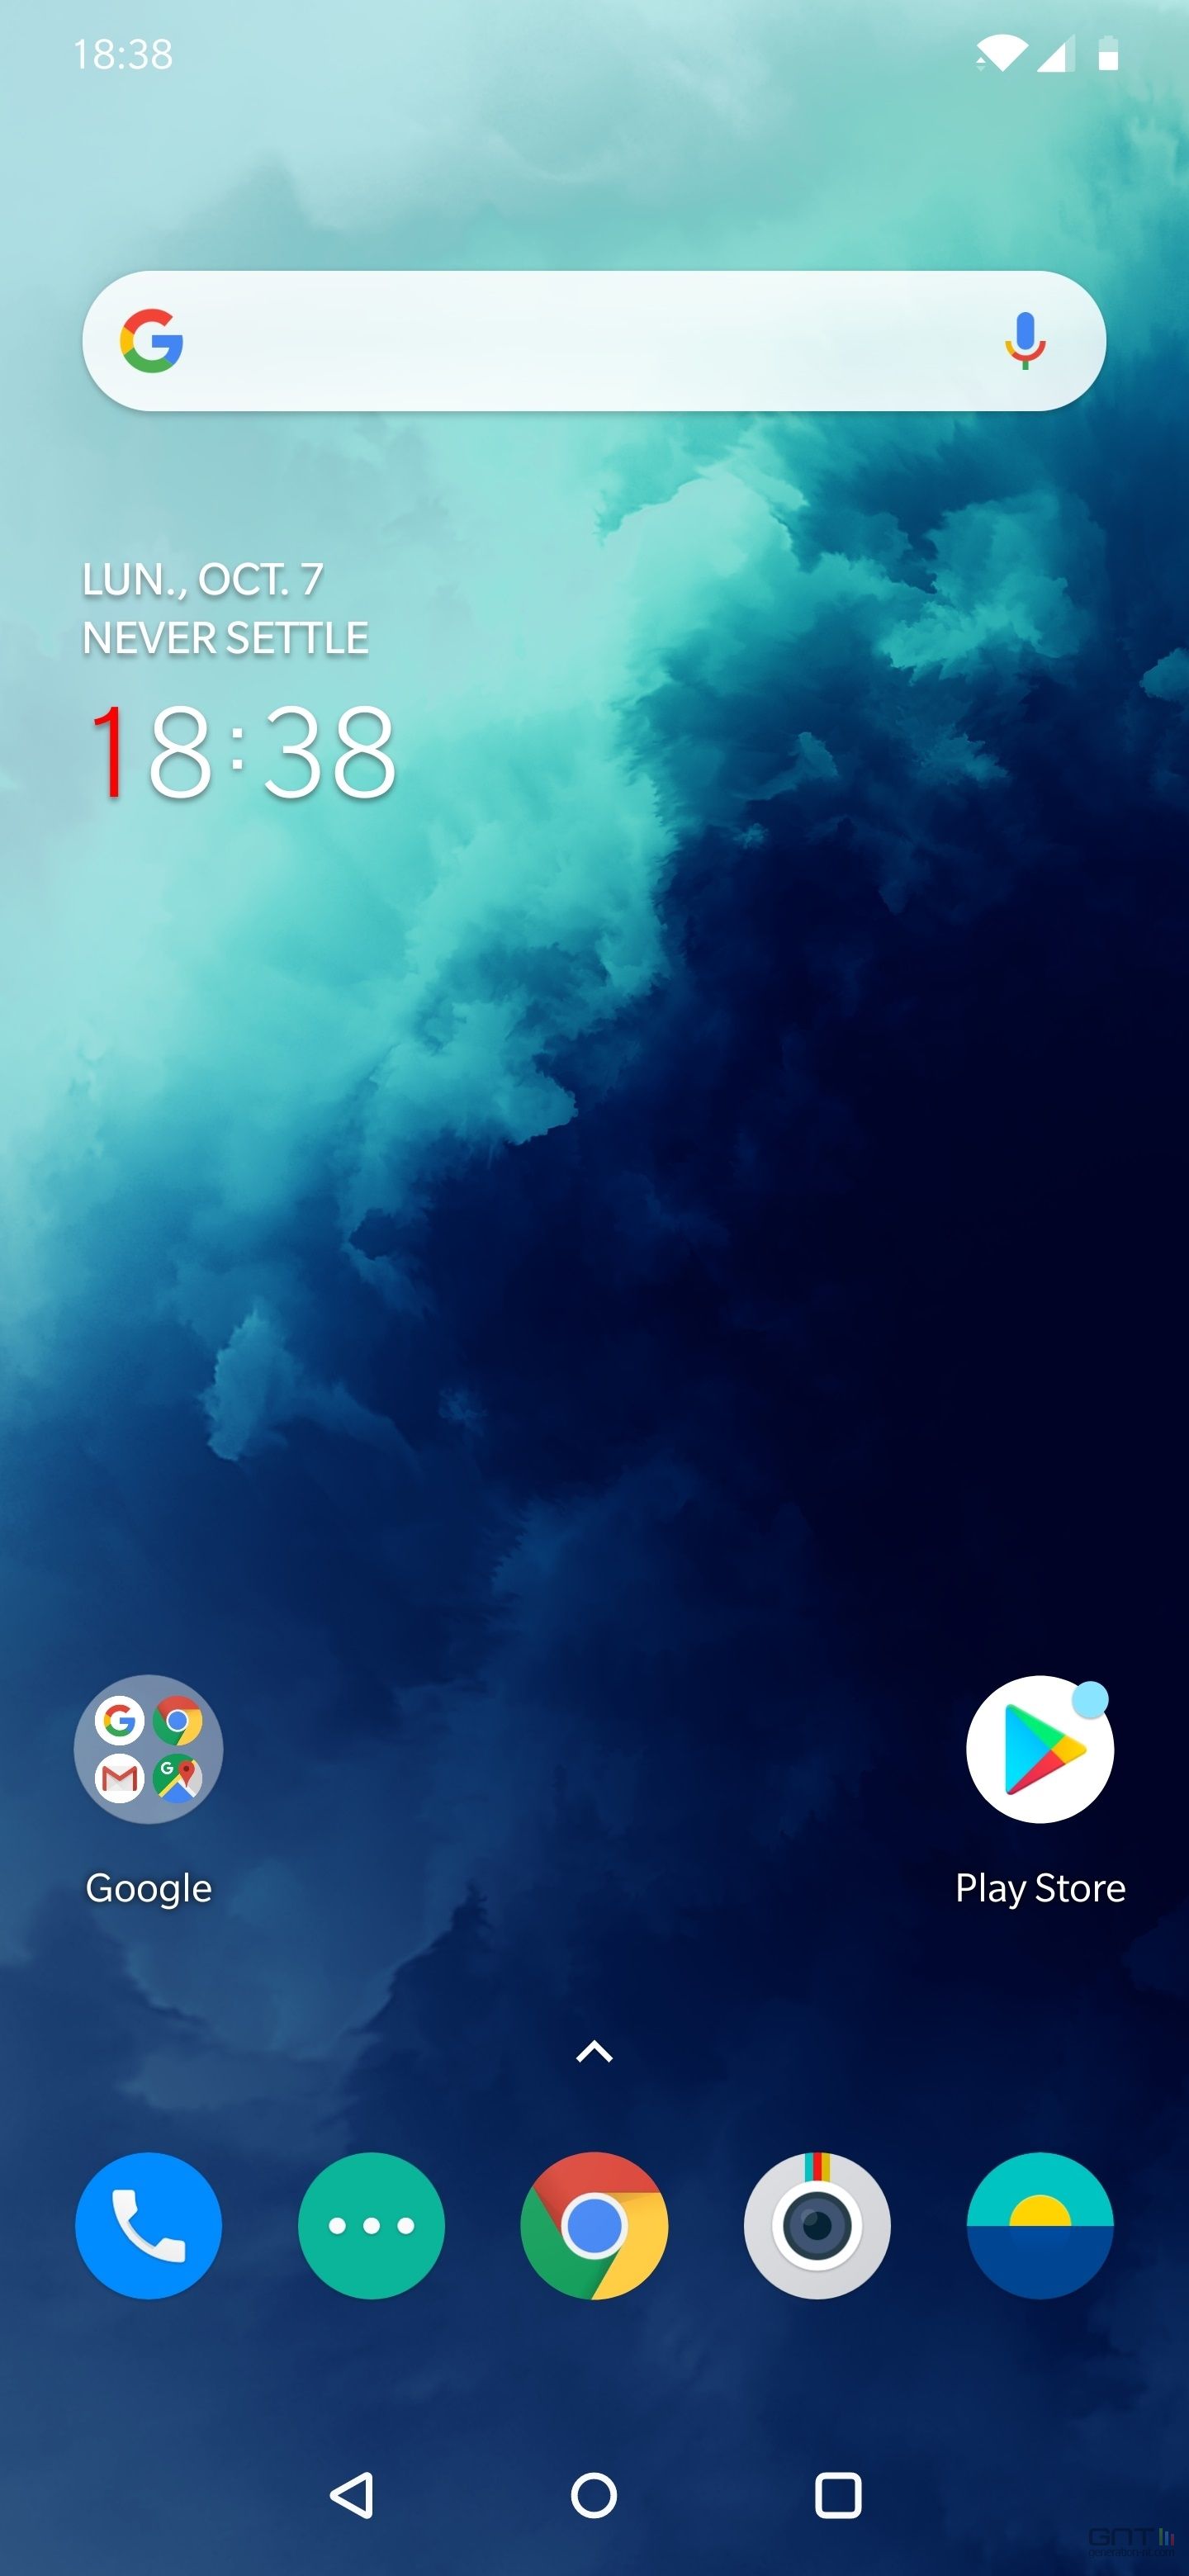 OnePlus 7T Pro ecran accueil 01